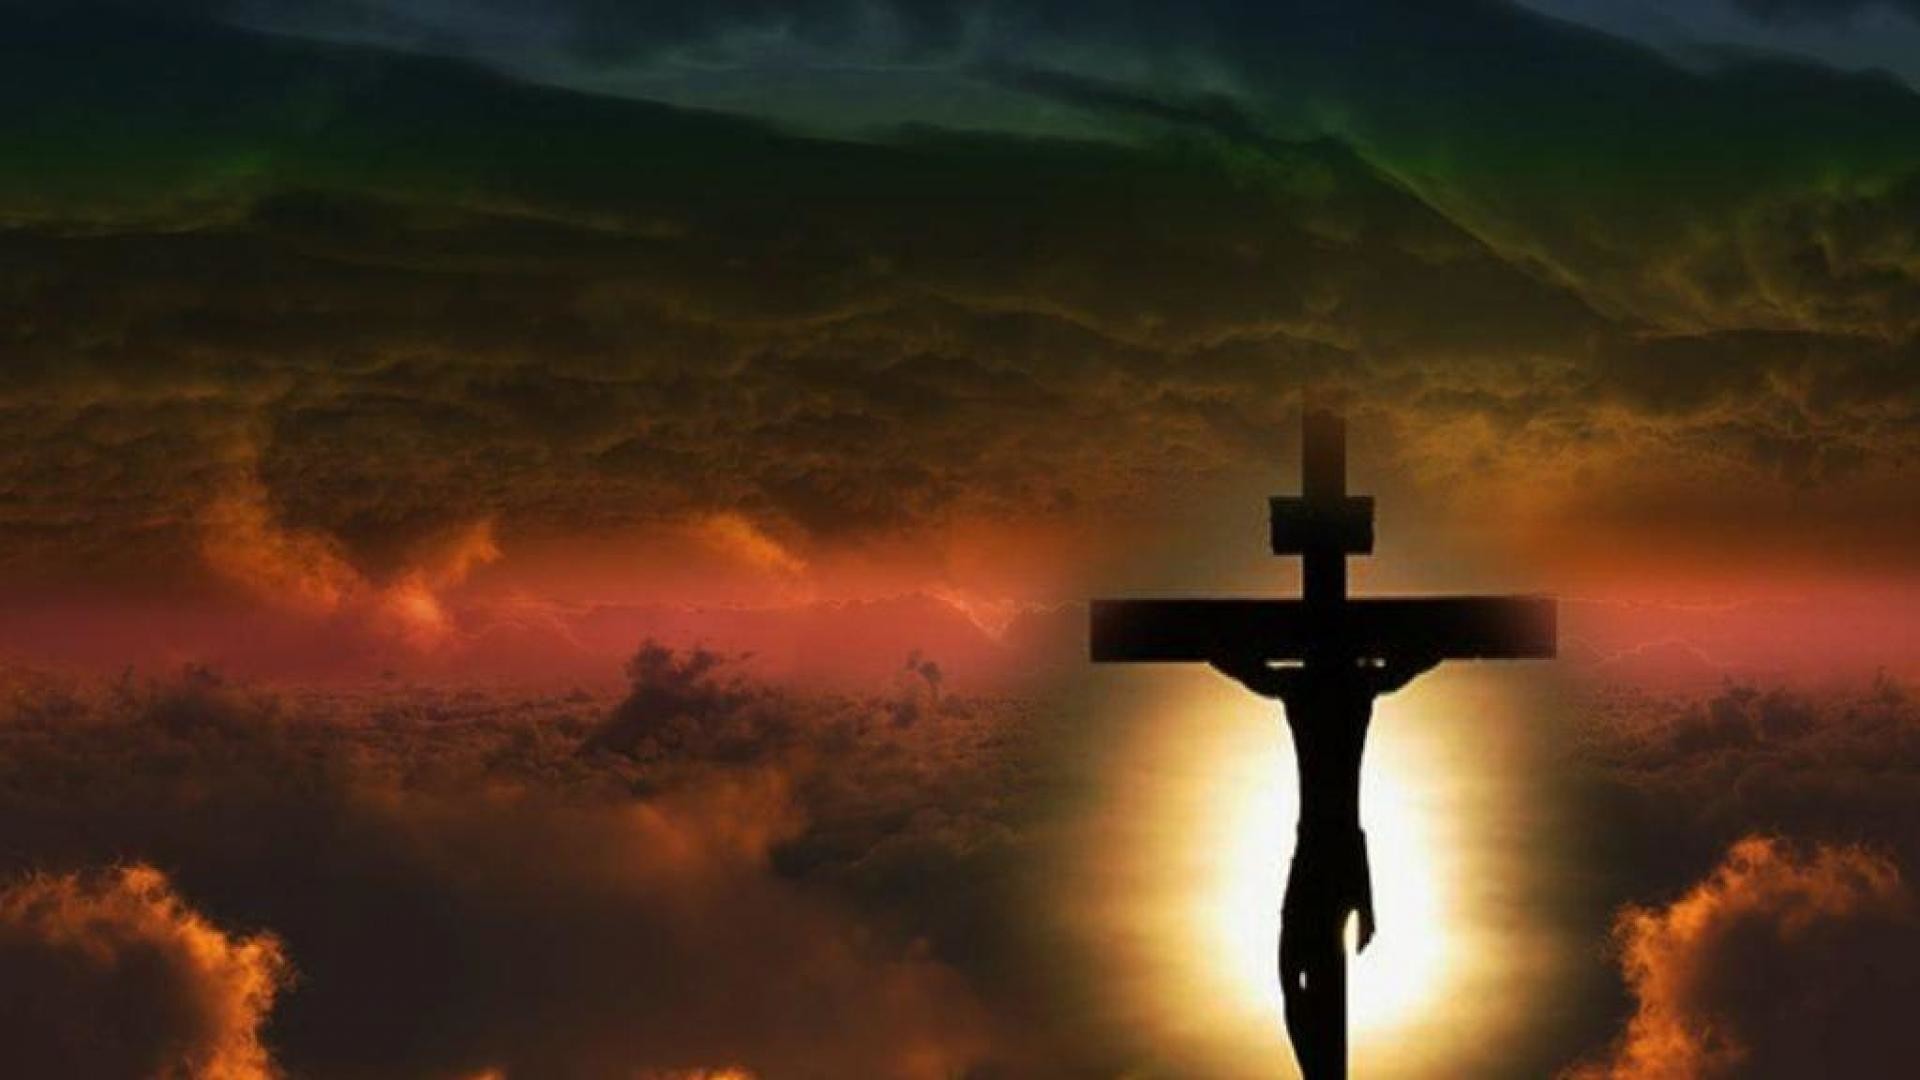 Jesus Cross Images Hd Download Free : Free Download Jesus Cross Hd ...